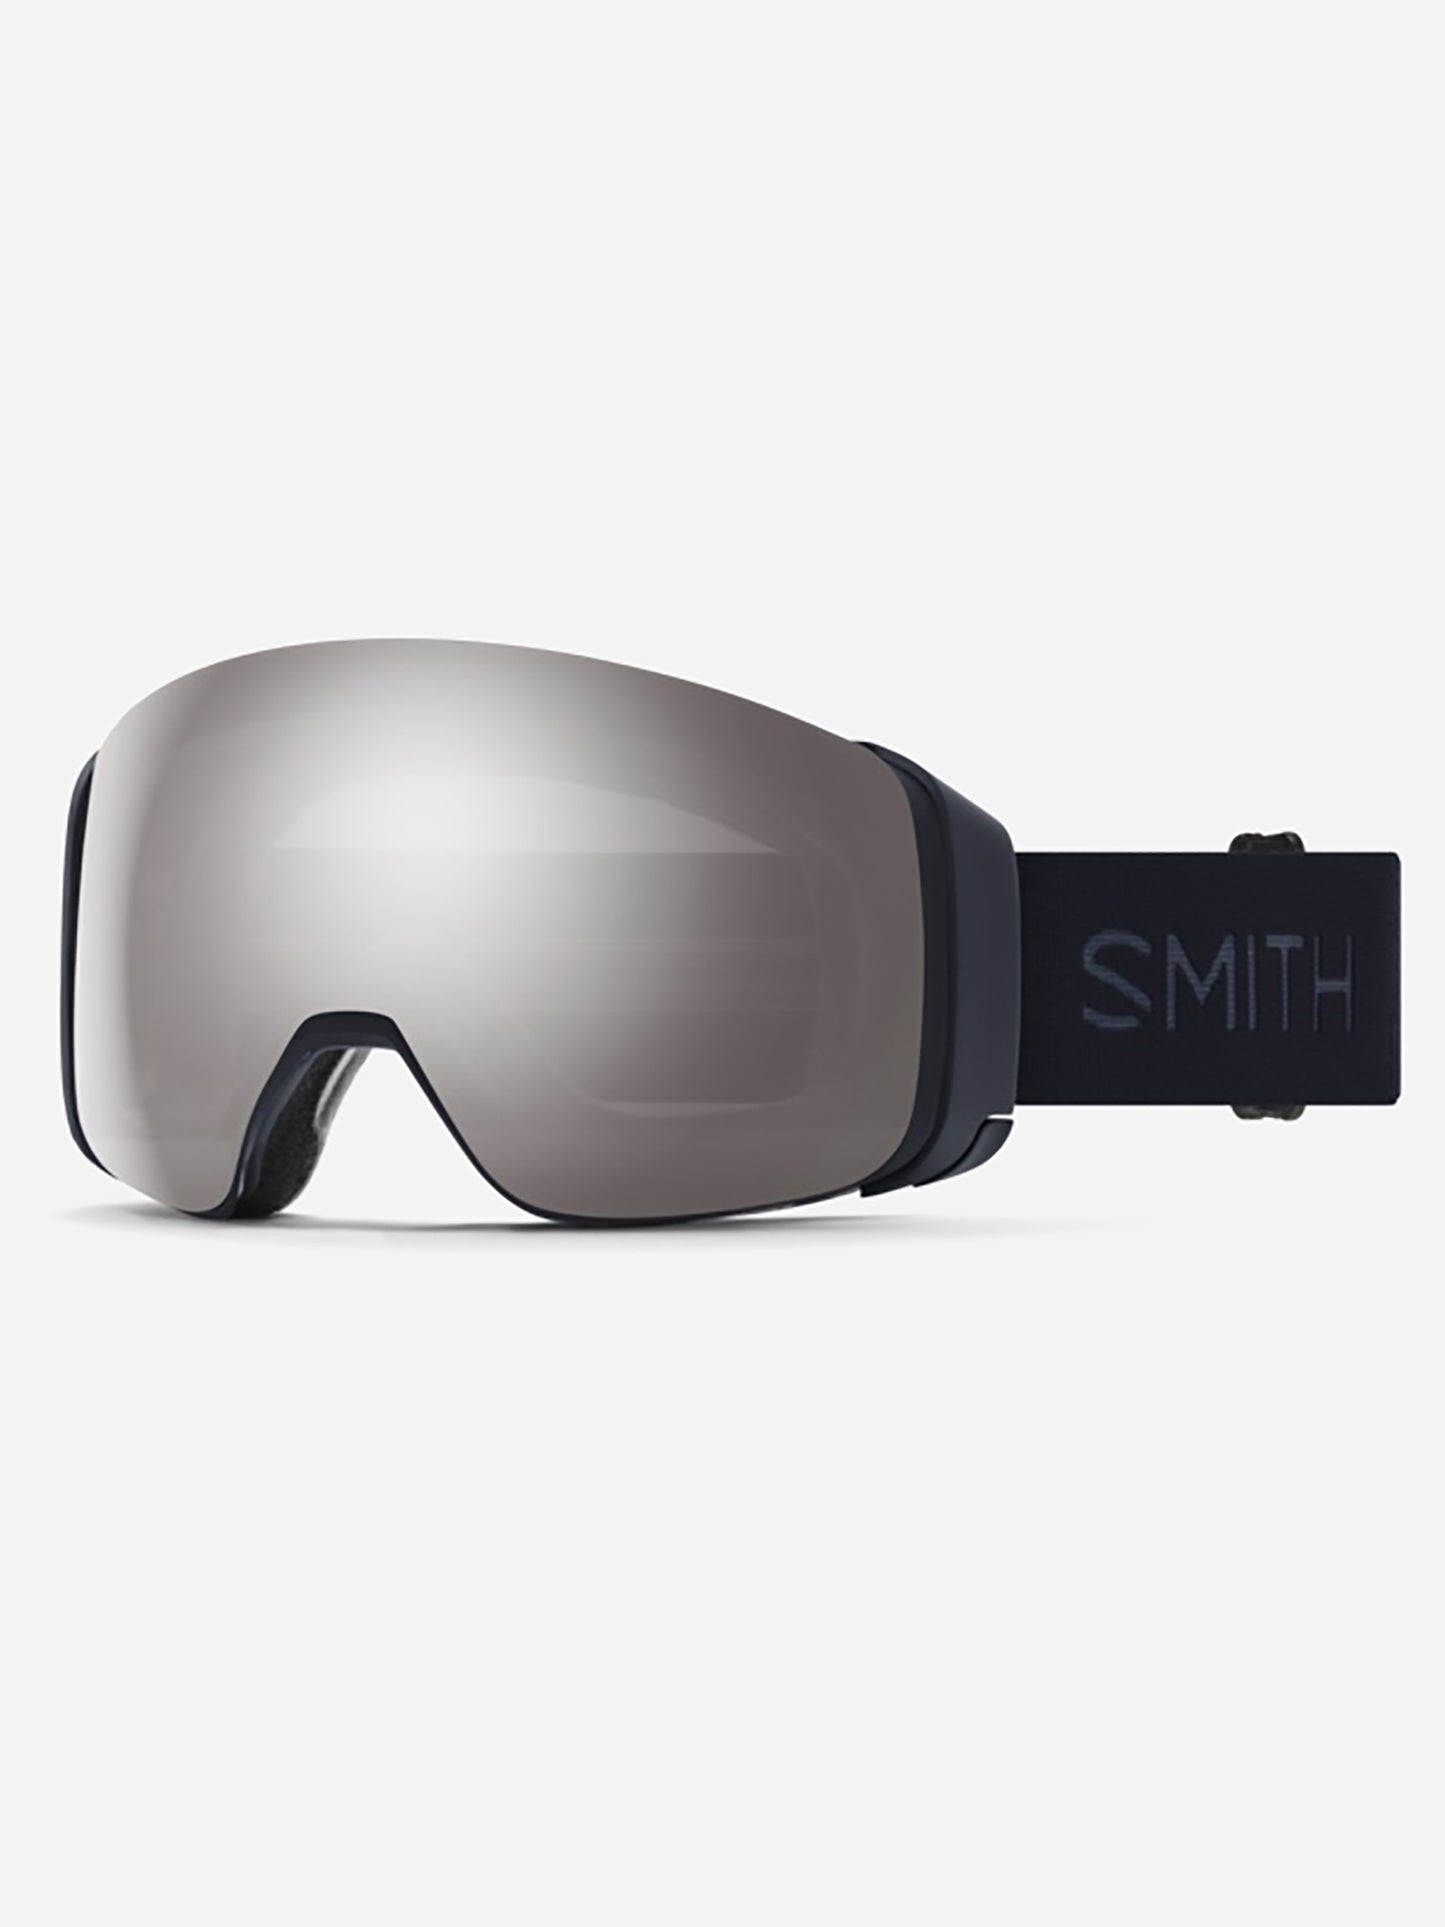 Smith 4D MAG Low Bridge Fit Snow Goggle